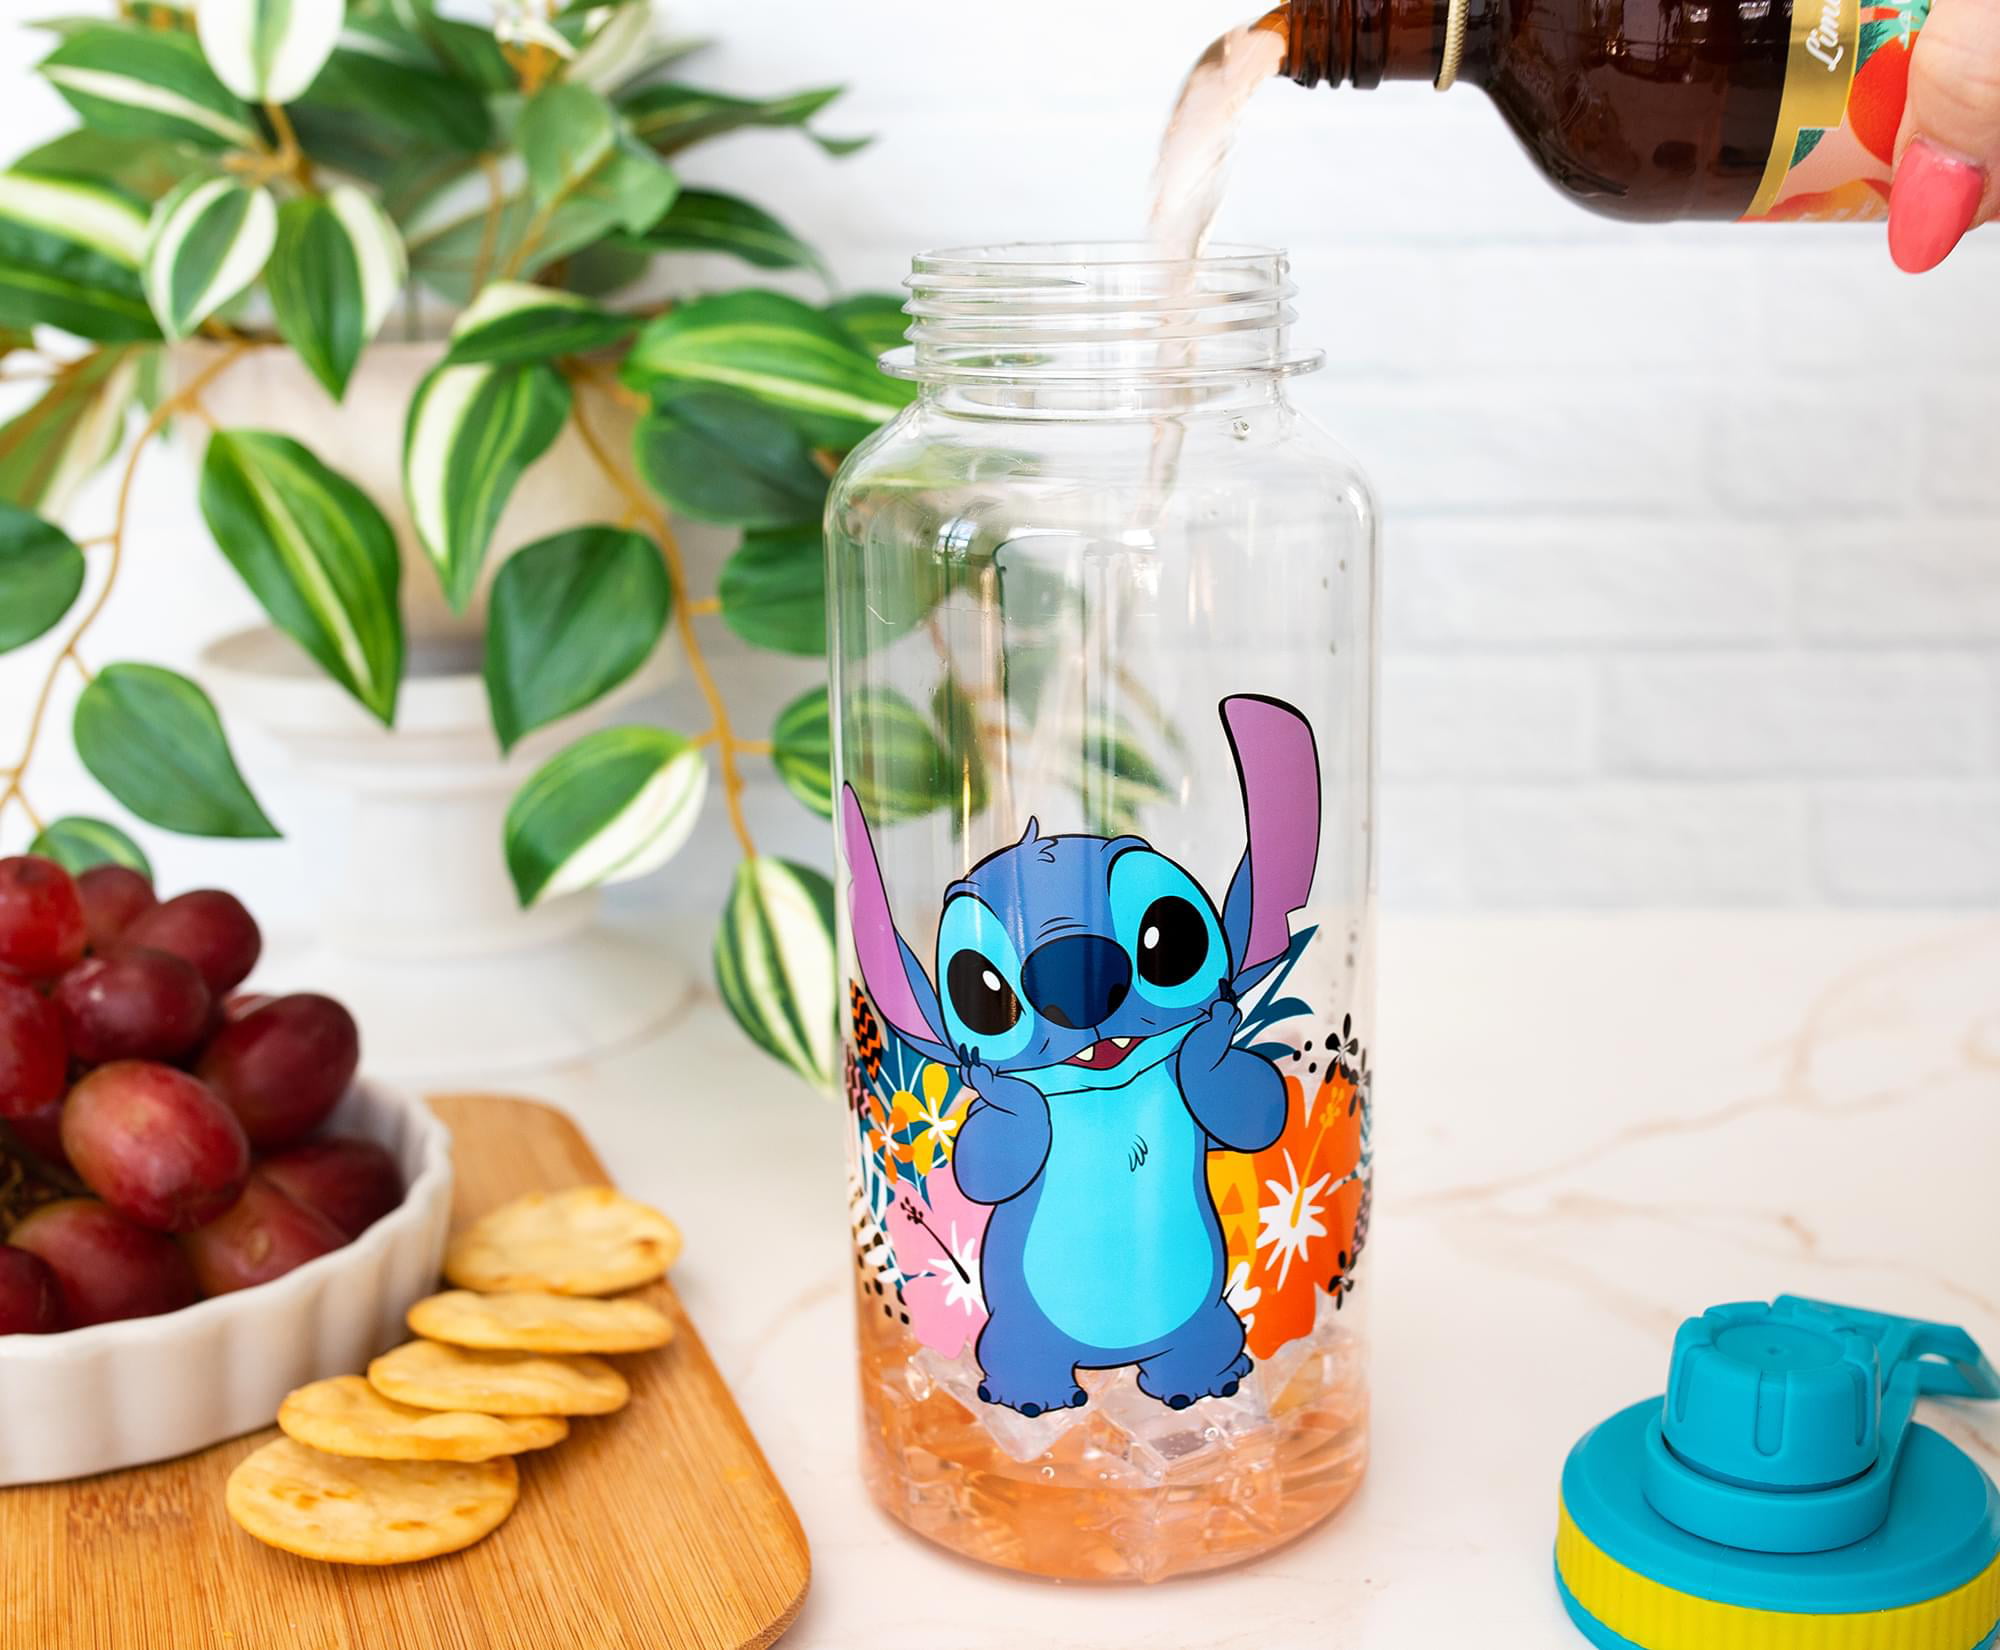 Lilo & Stitch 838122 25 oz Disney Hula Water Bottle with Silicone Handle